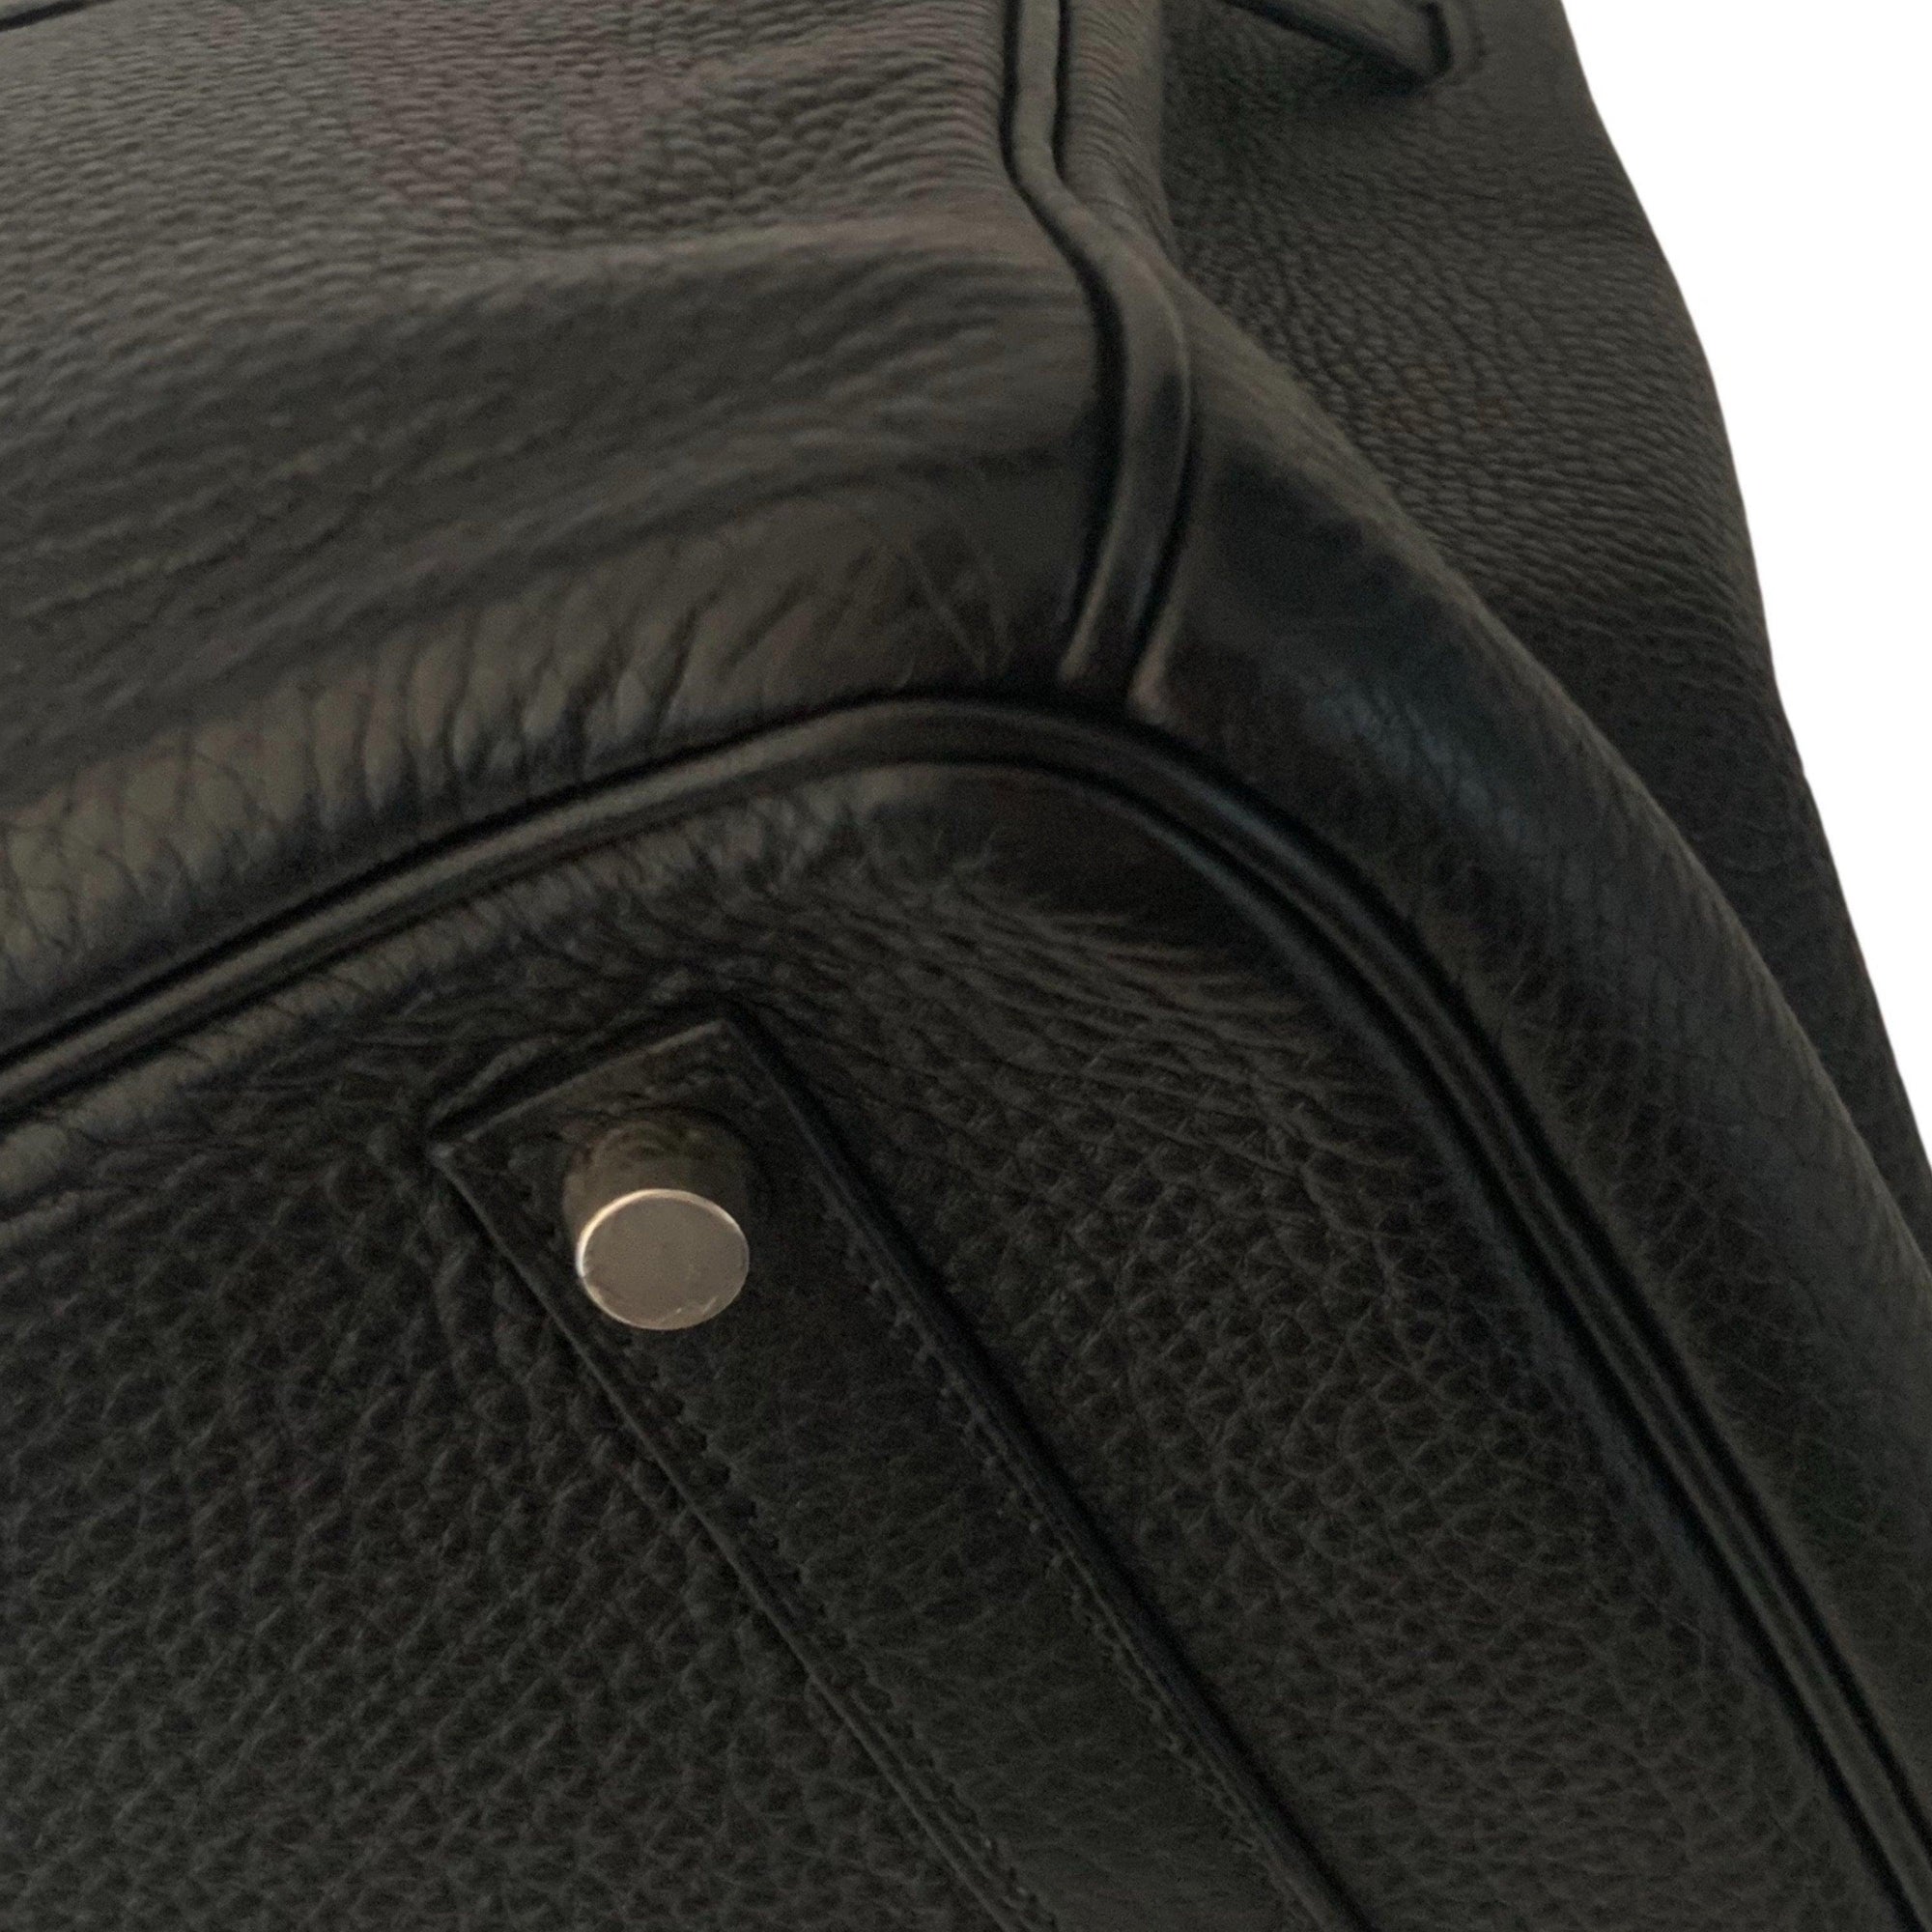 Hermes Black 35 Birkin - Handbags